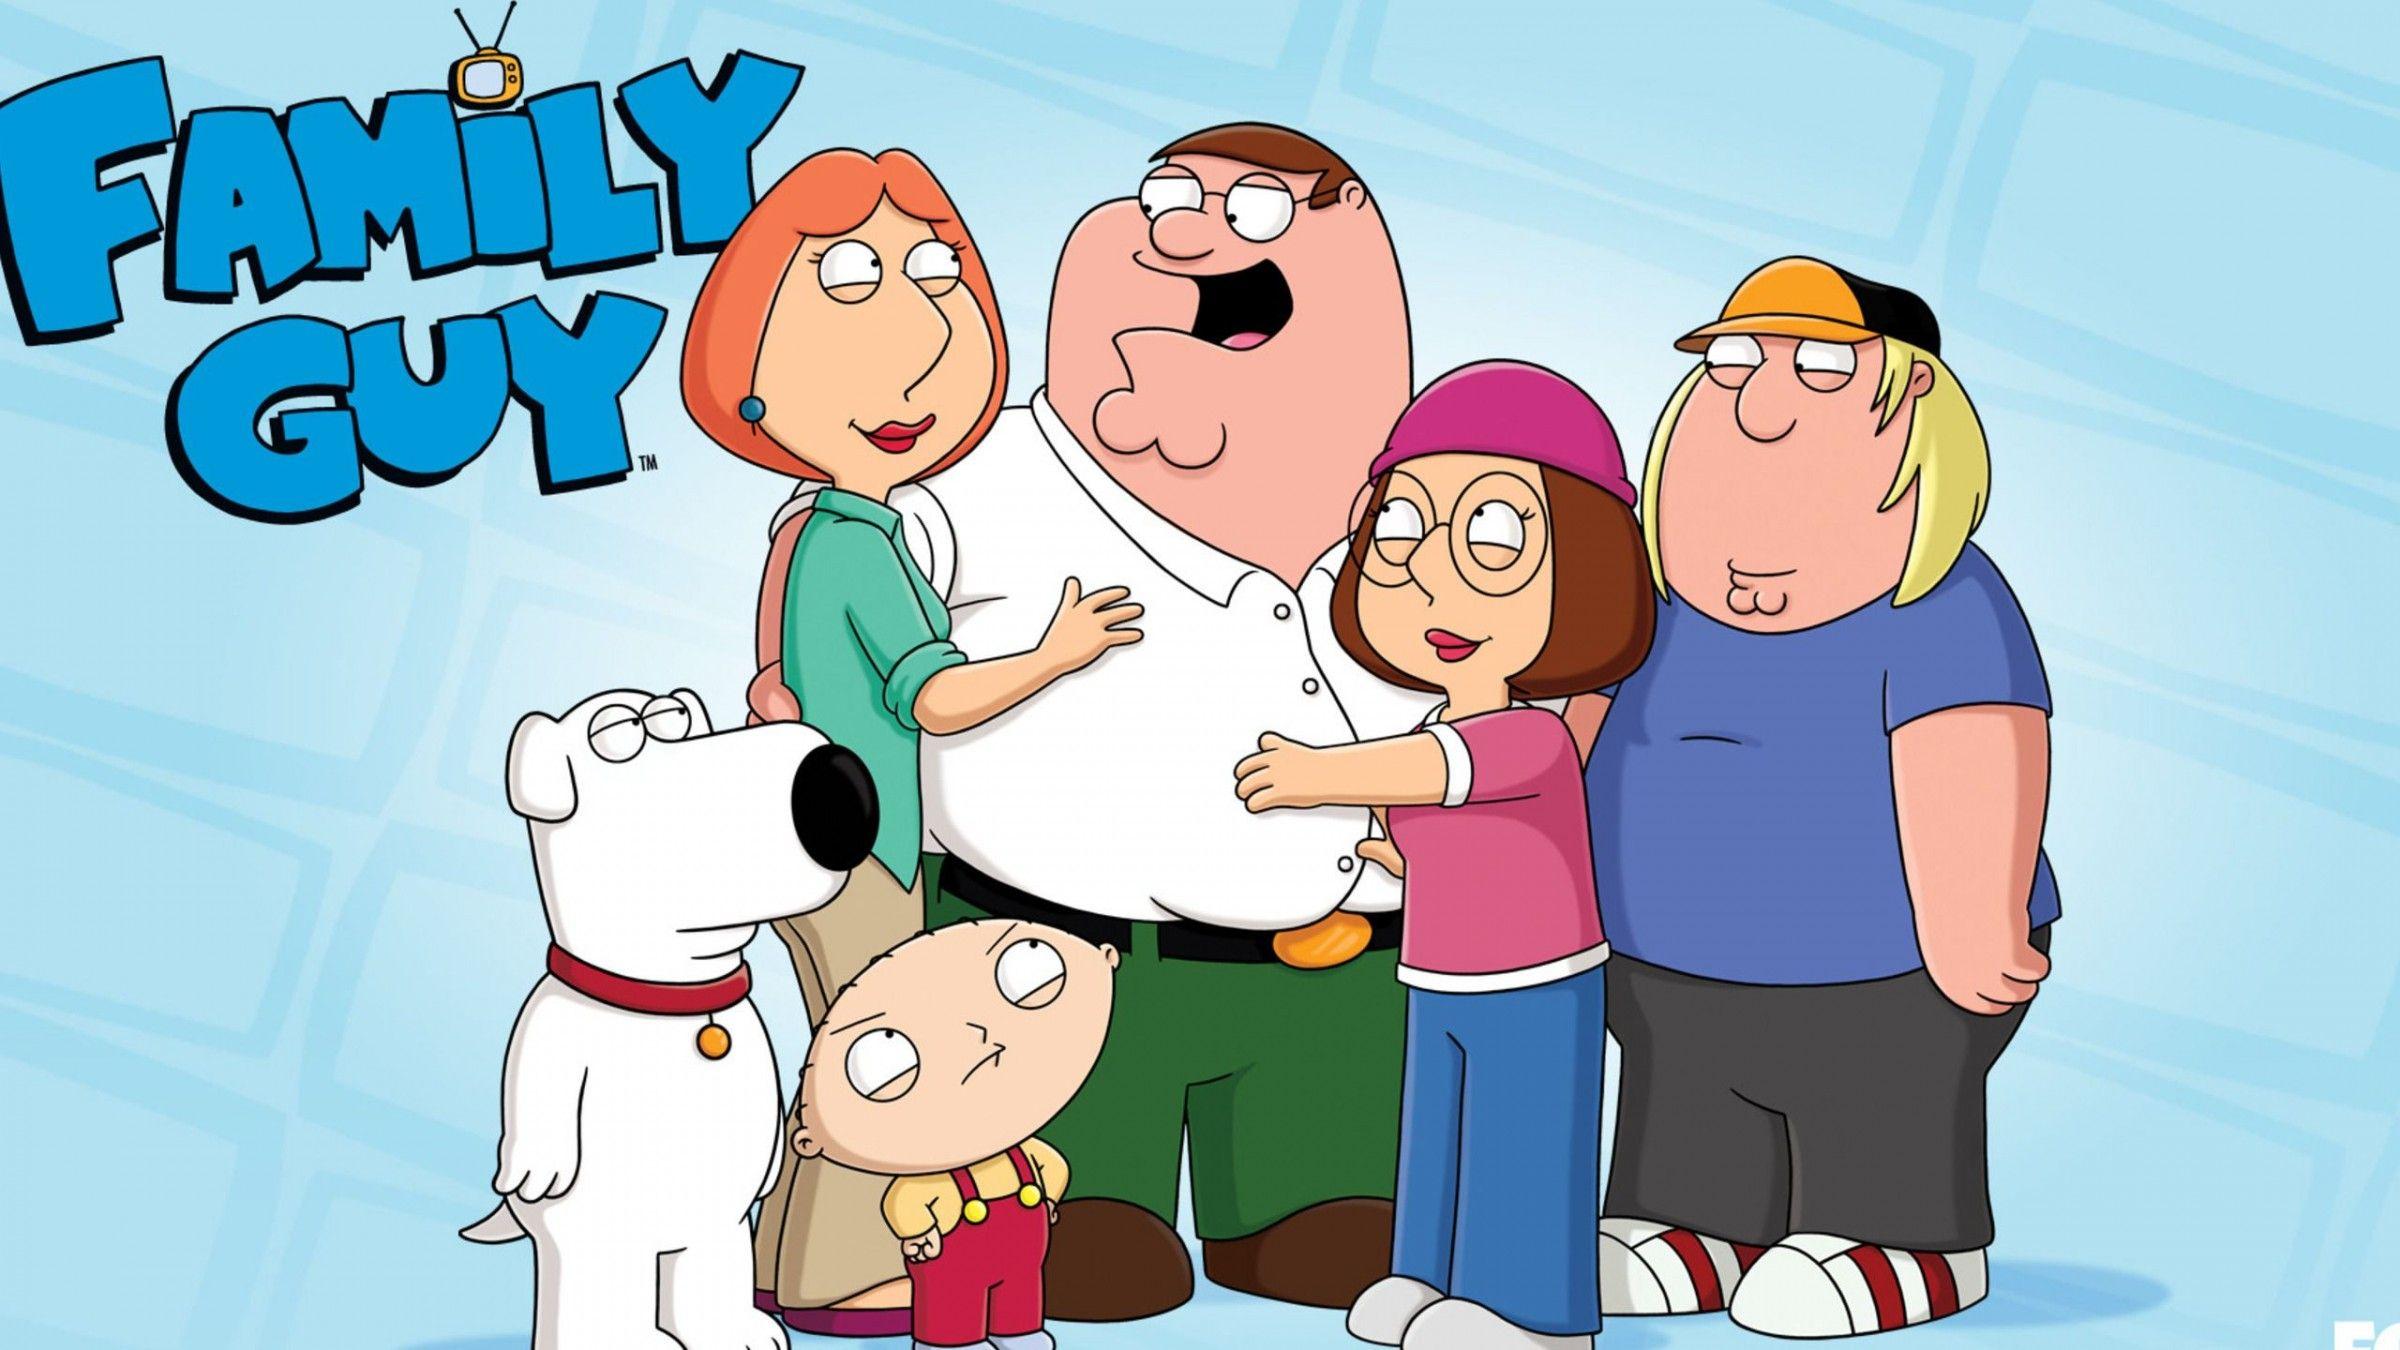 Family Guy Theme Song. Movie Theme Songs & TV Soundtracks